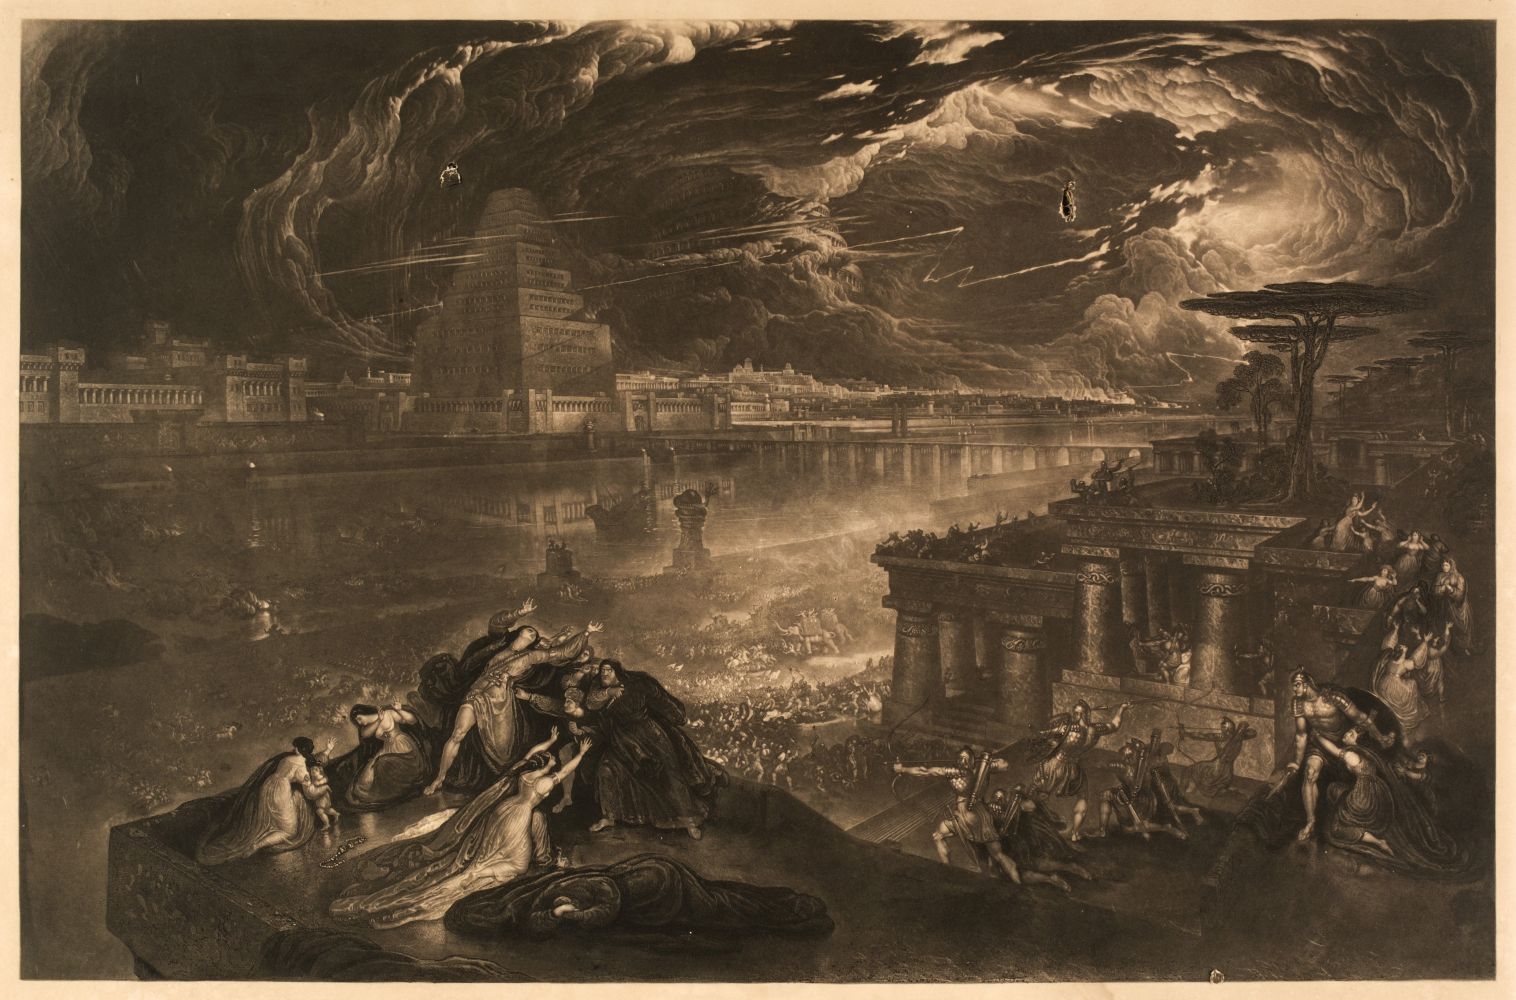 The Fall of Babylon & Belshazzar's Feast by John Martin, 1832